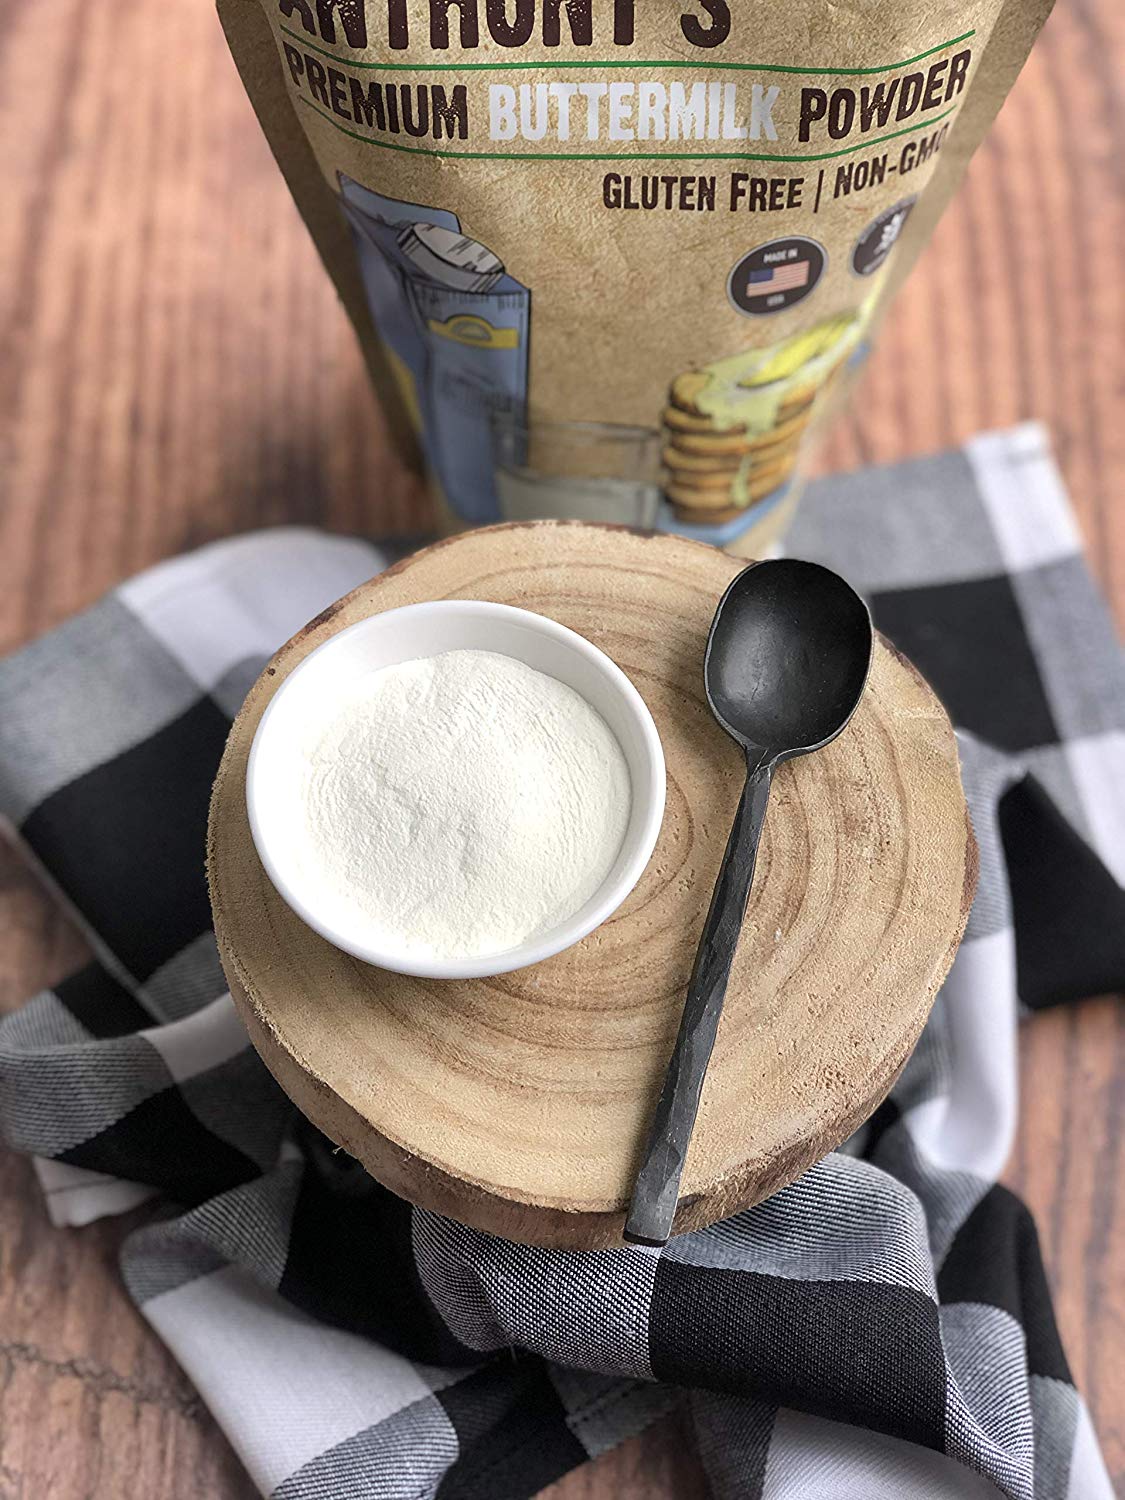 Premium Powdered Buttermilk: Non-GMO & Gluten-Free